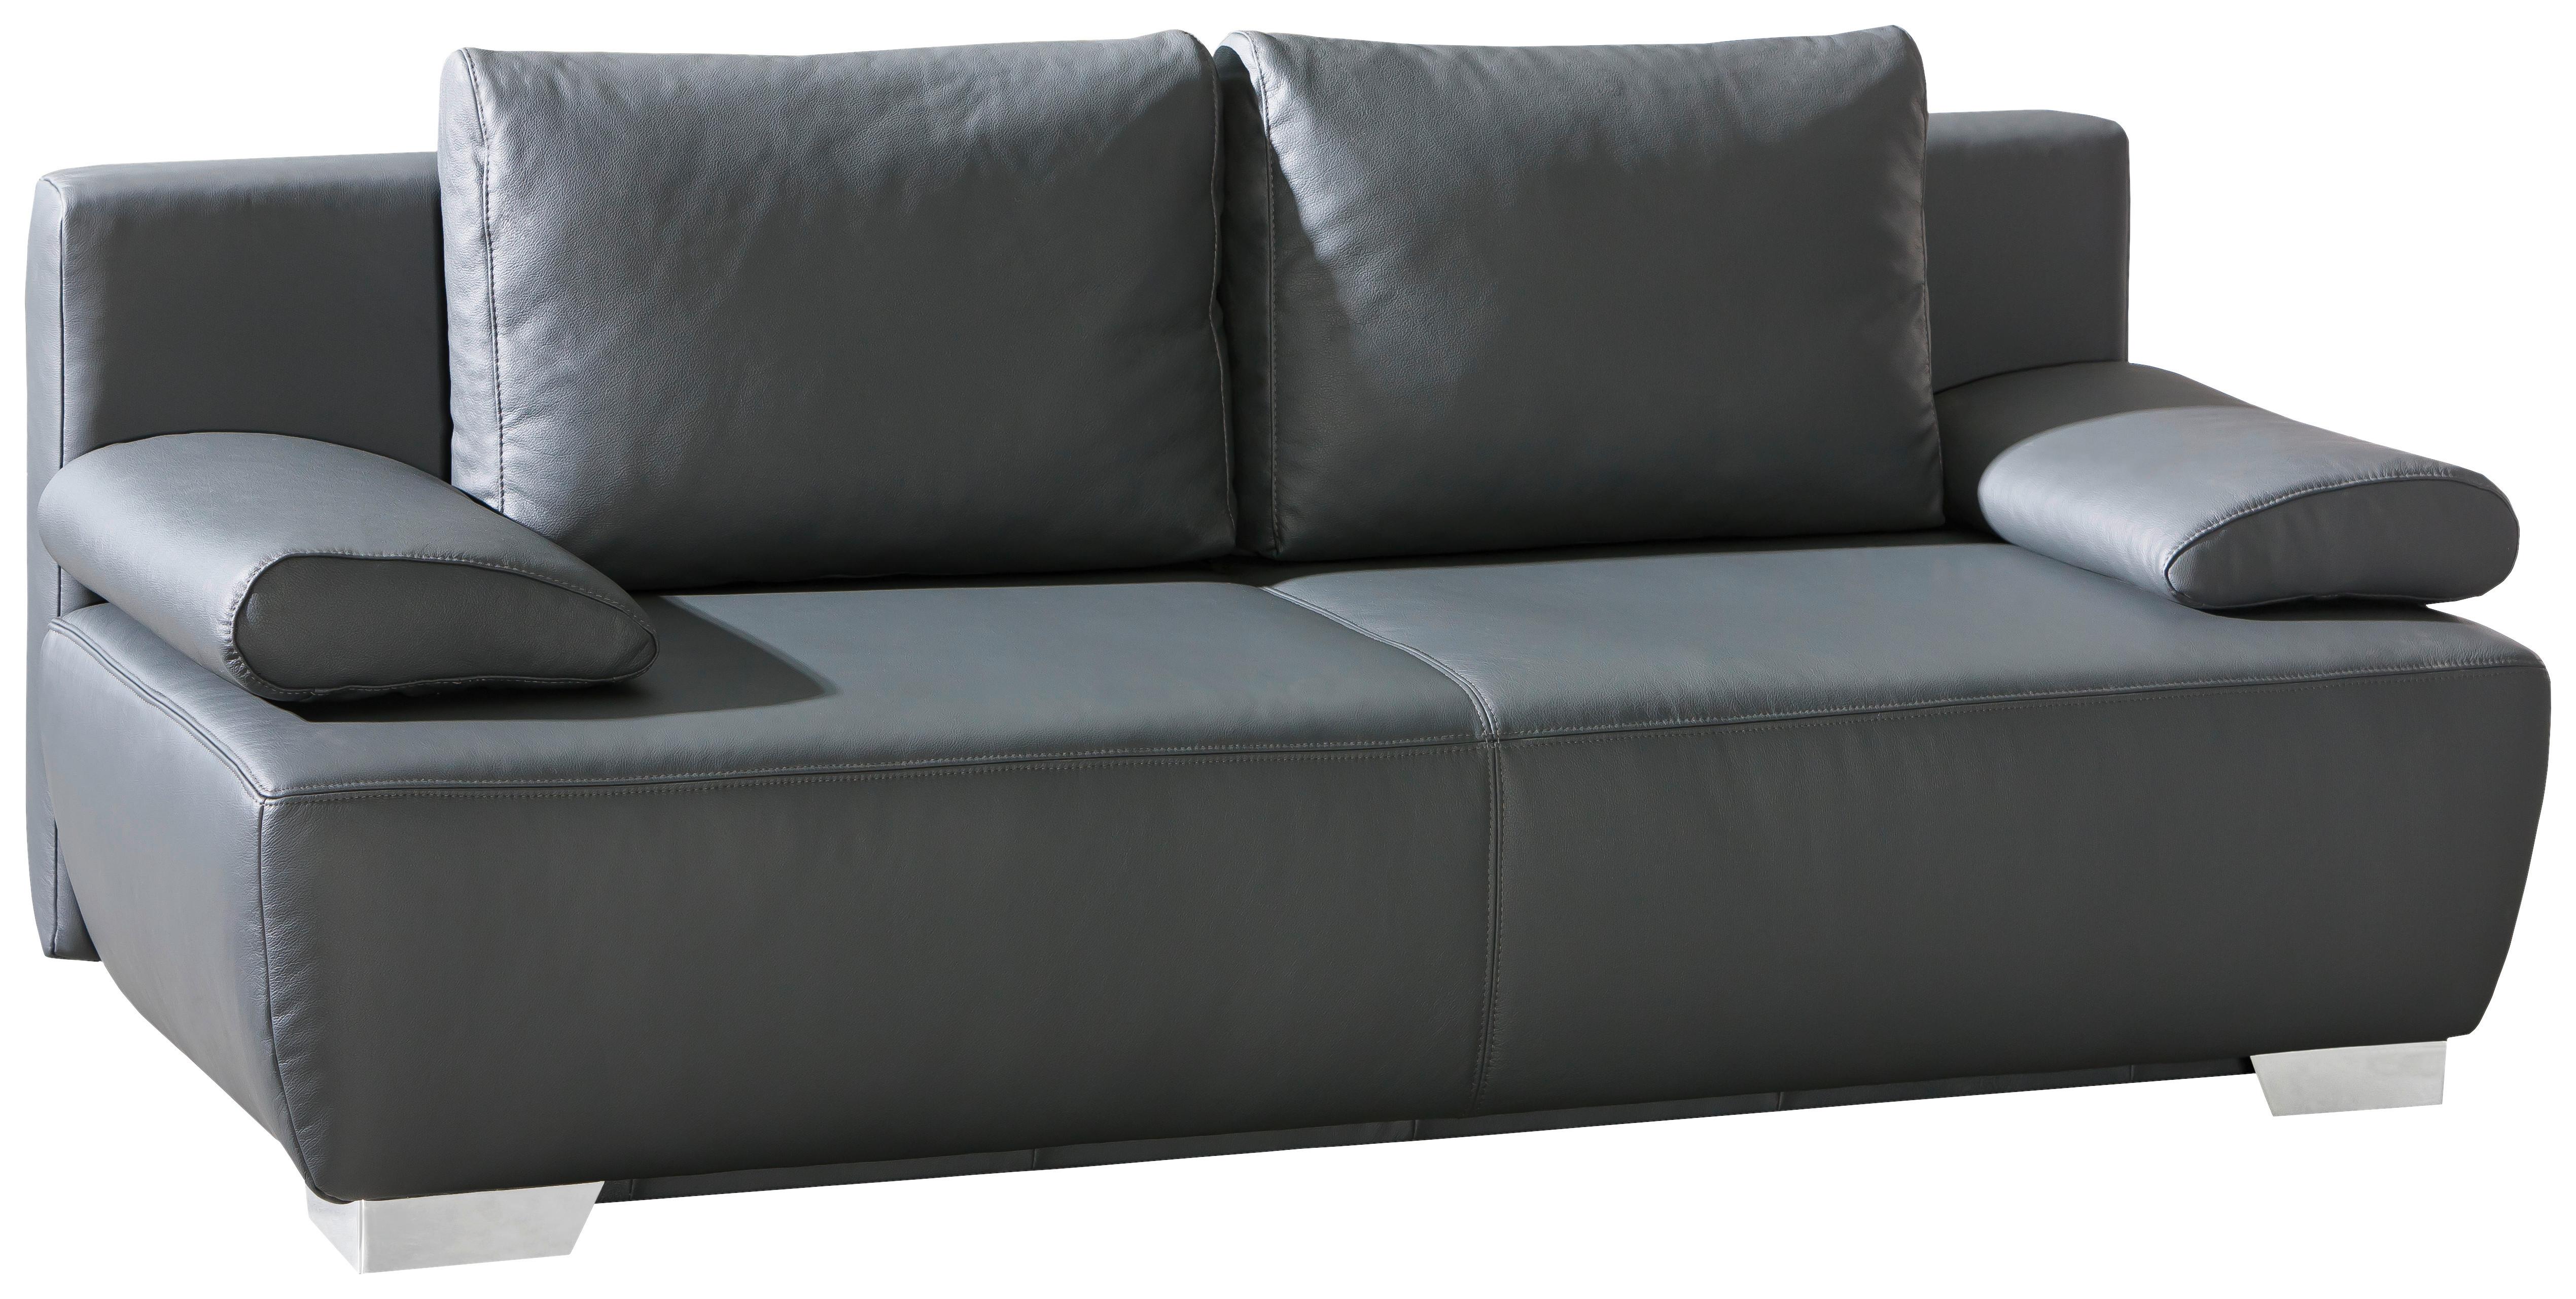 2-Sitzer-Sofa mit Schlaffunkt. + Nikita Anthrazit Leder - Chromfarben/Anthrazit, KONVENTIONELL, Leder (195/85/90cm) - Livetastic